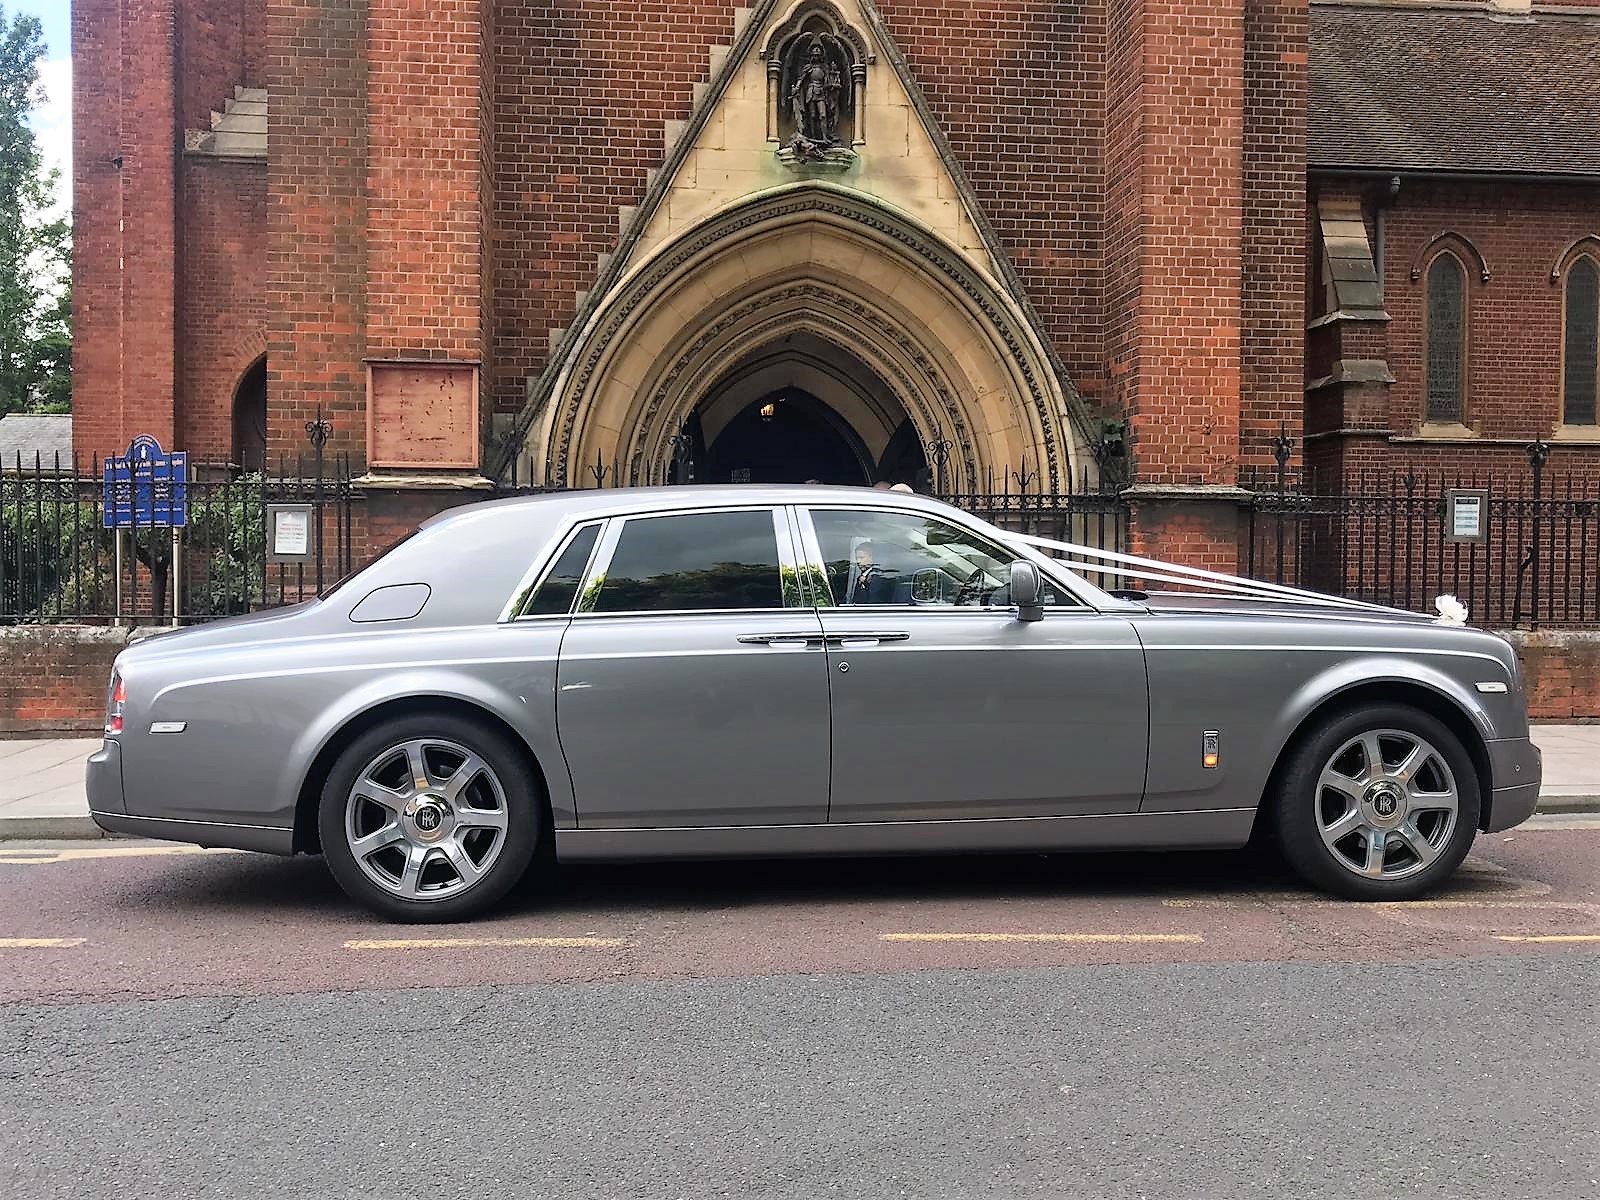 The Rolls Royce luxury car - Imperial Ride